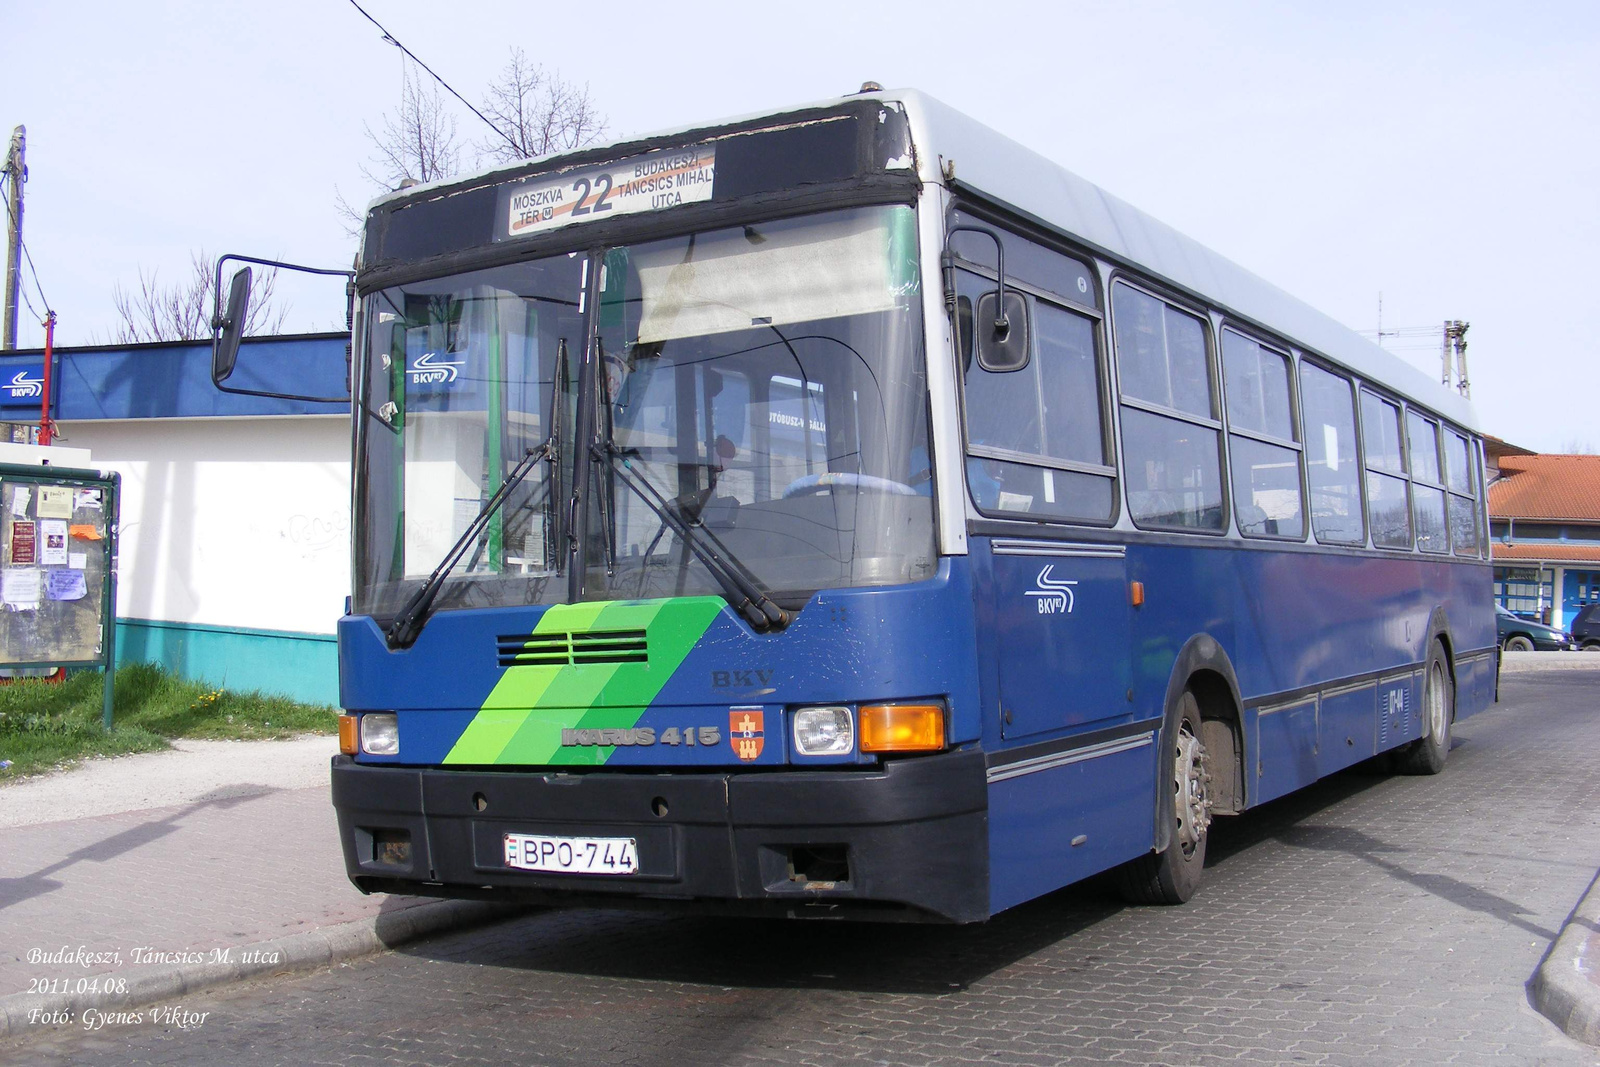 Busz BPO-744